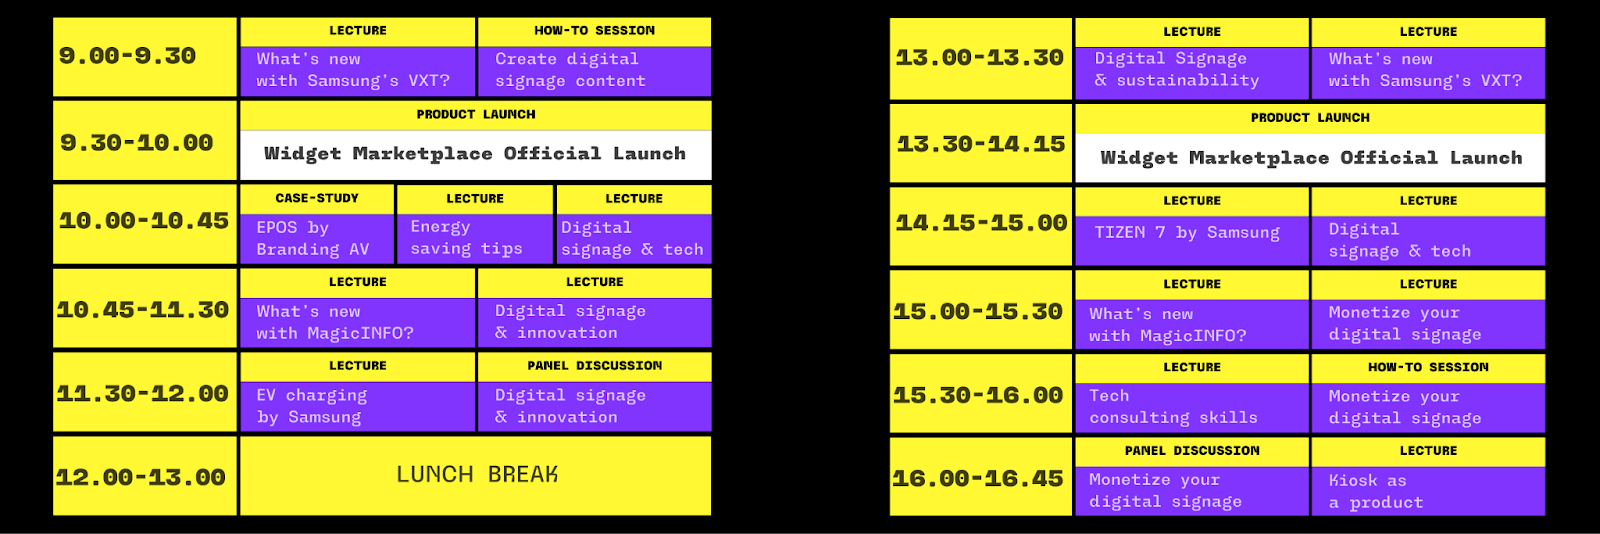 LOOKBEYOND23 official schedule 